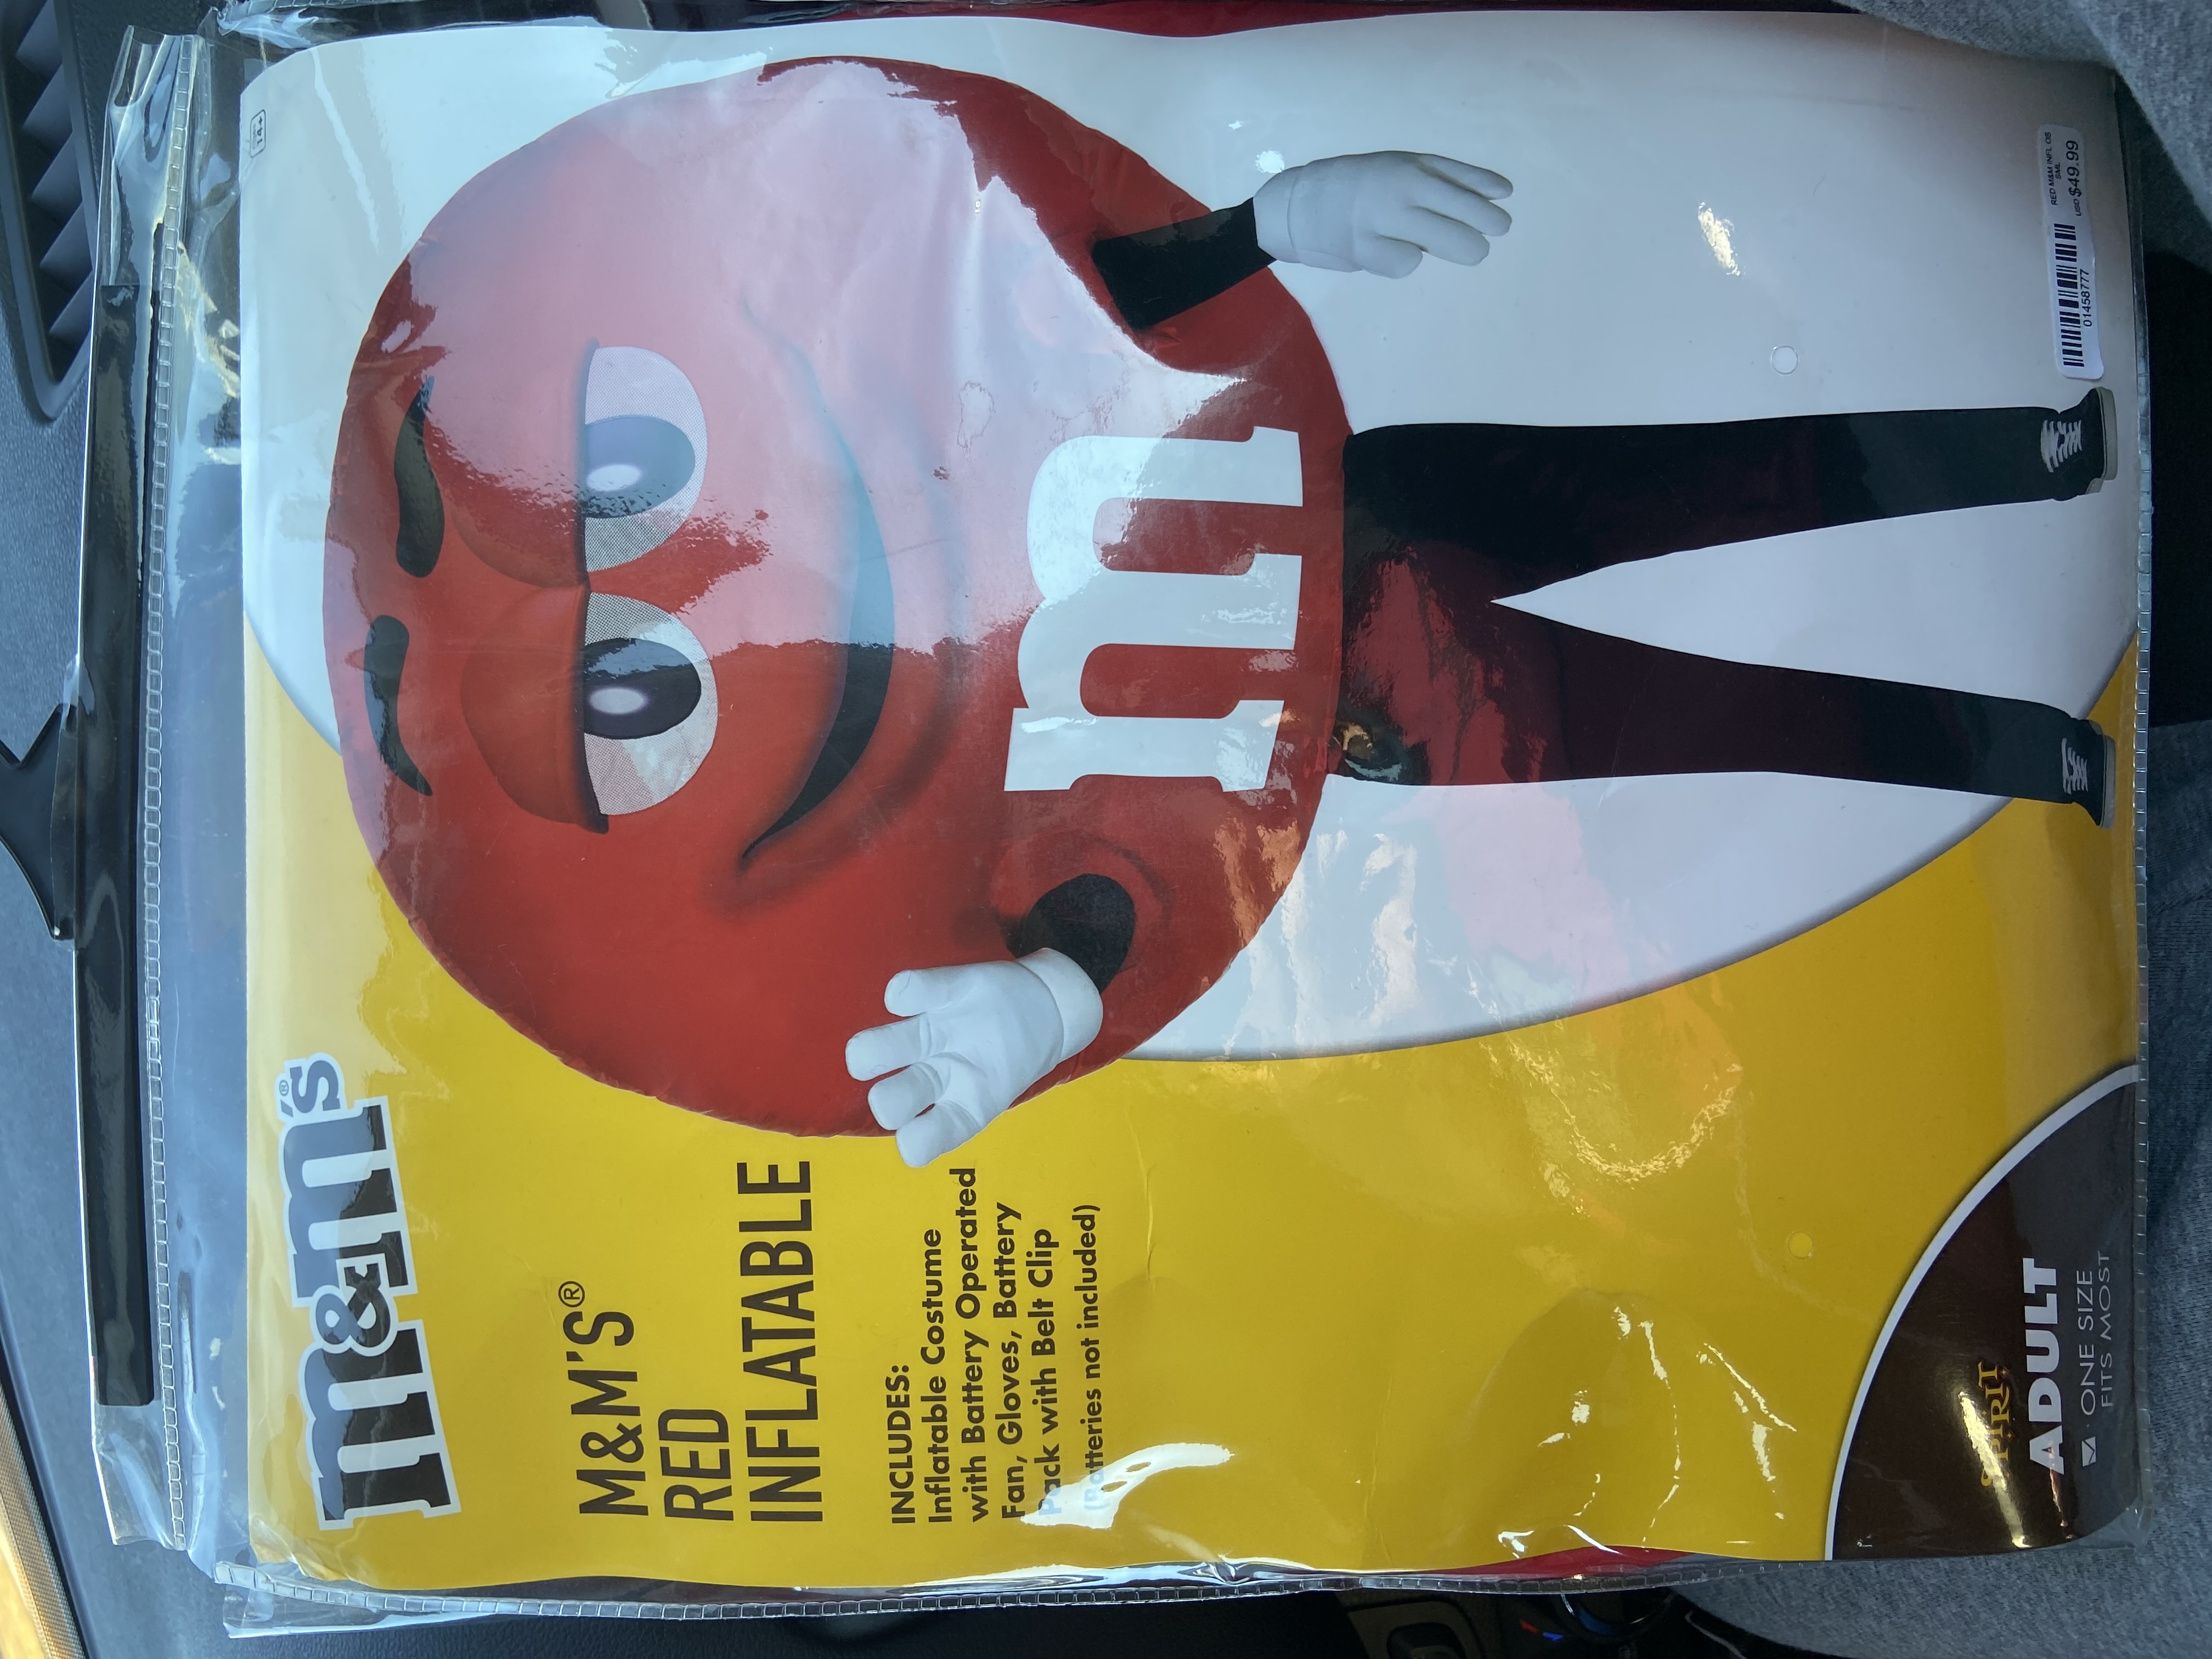 Red M&M Adult Halloween Costume 